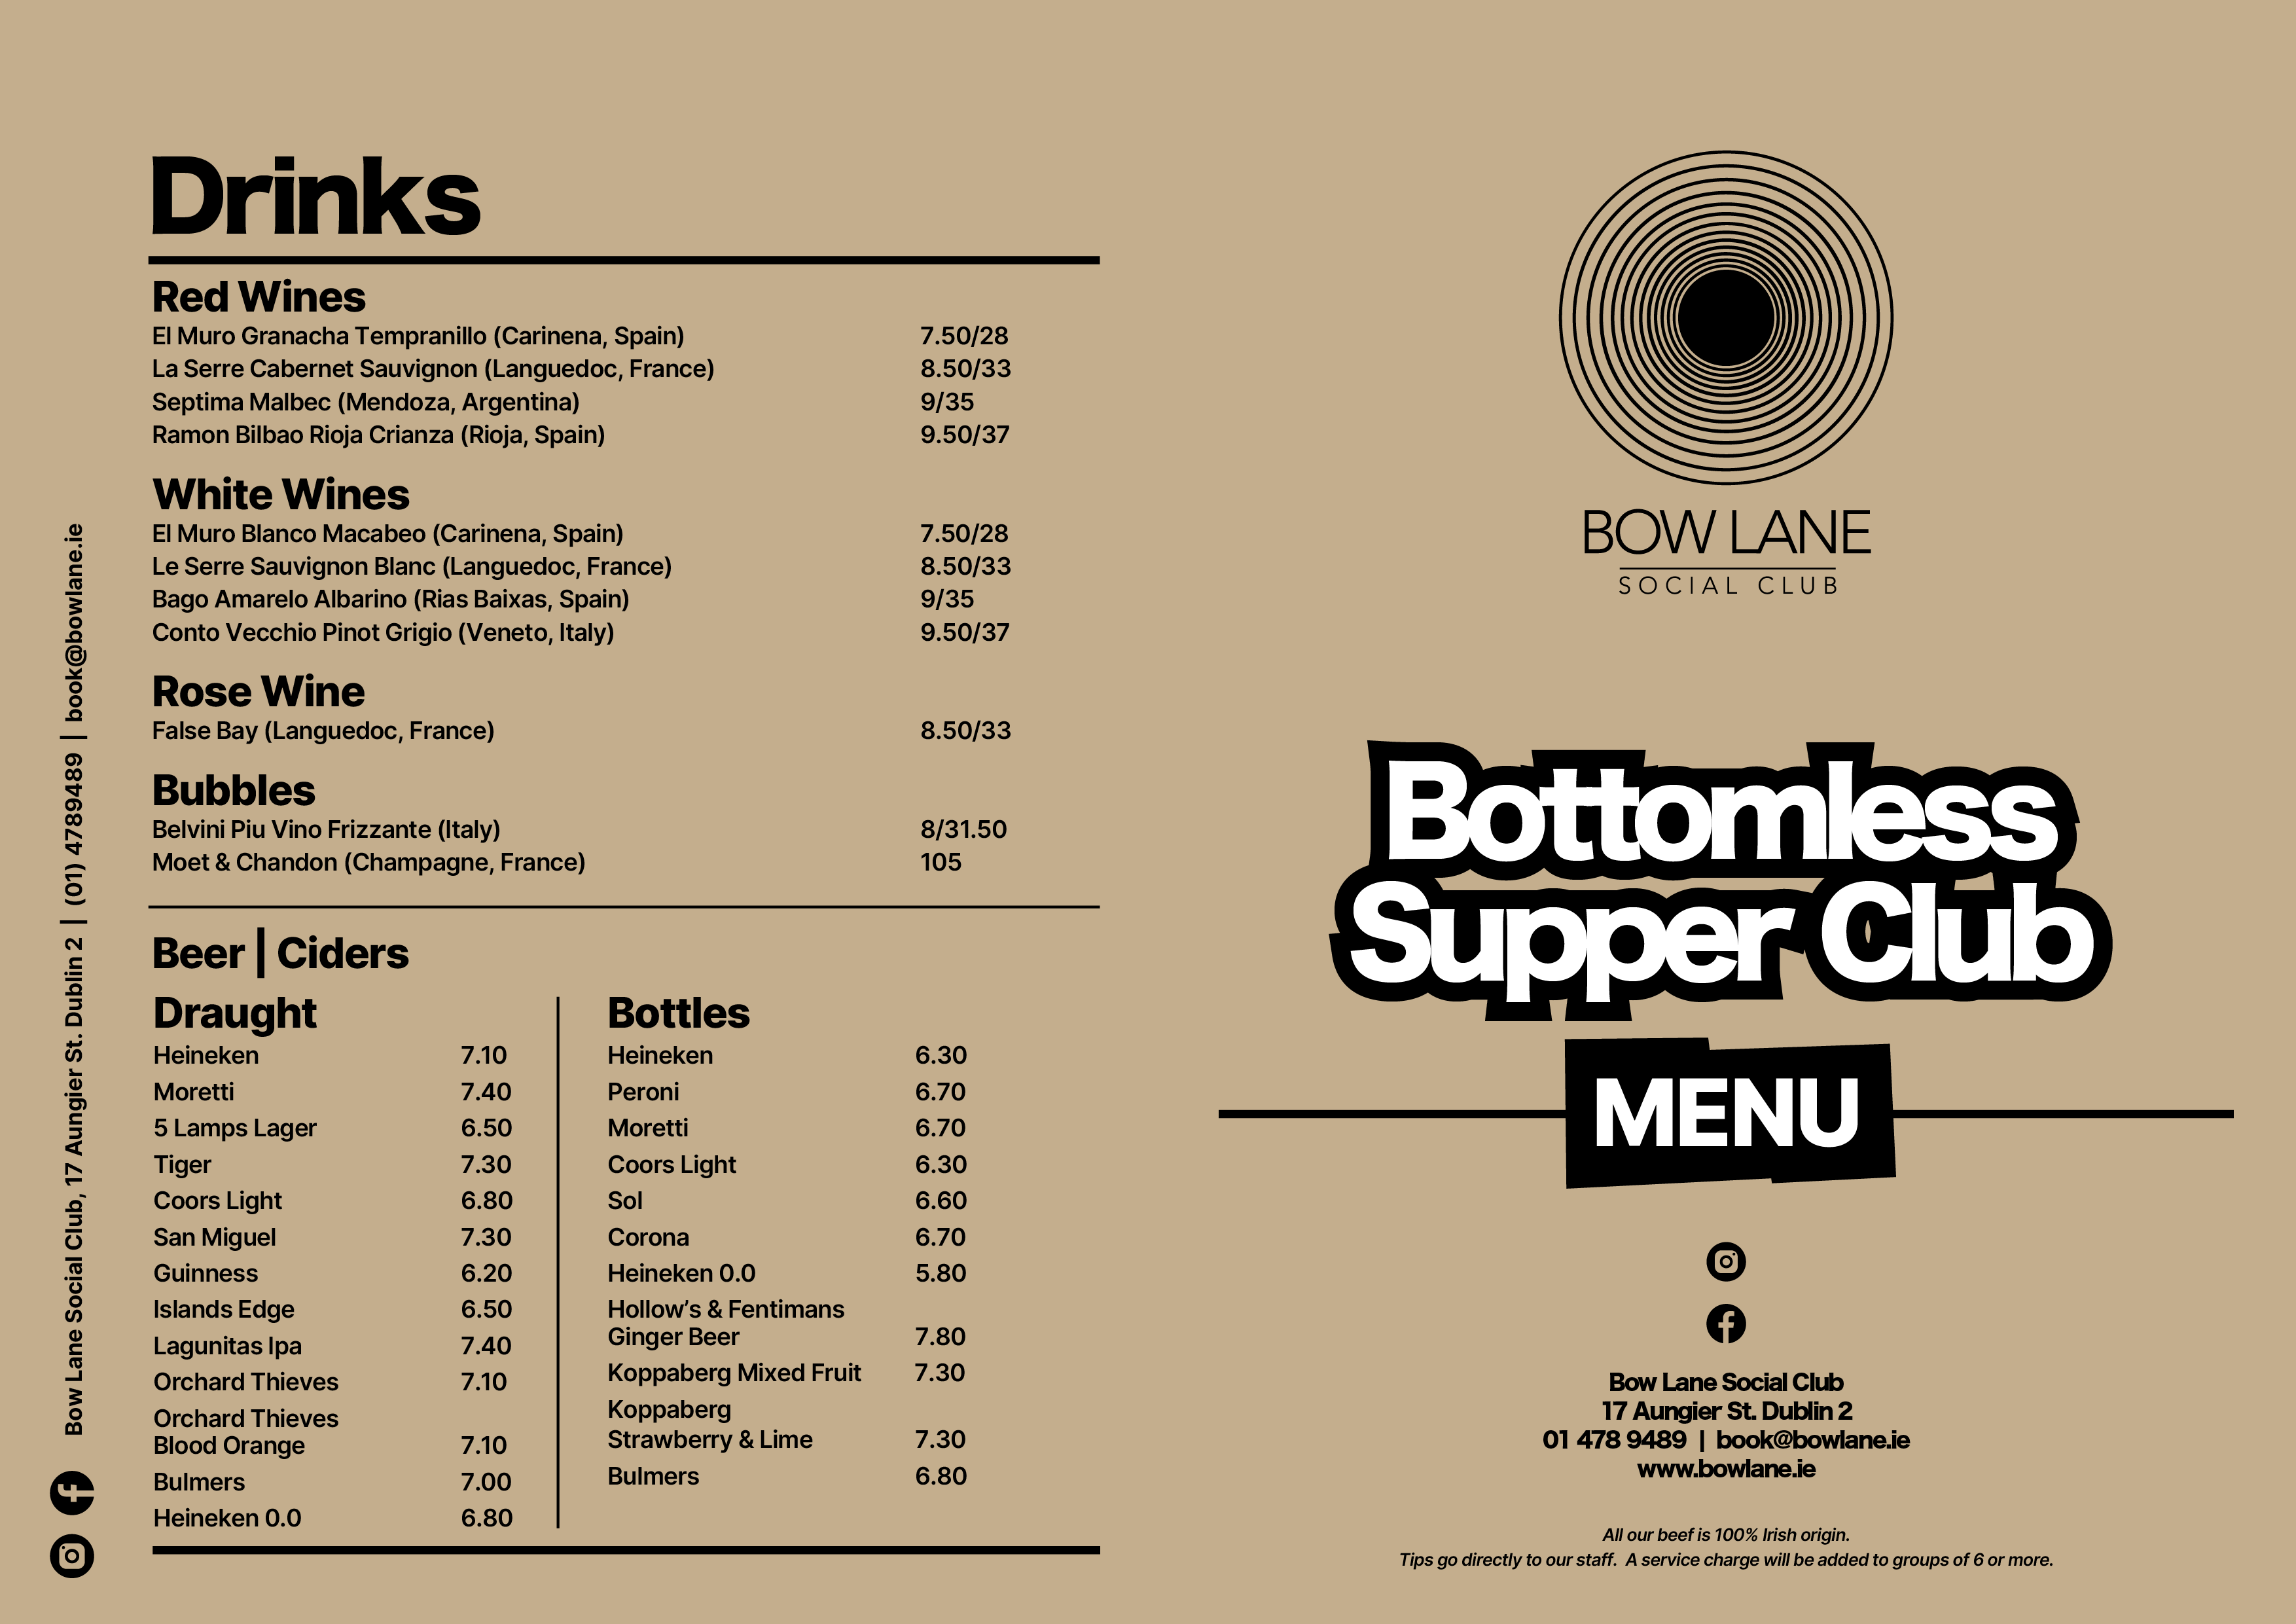 Bottomless Supper Club Drinks Menu - Bowlane Social